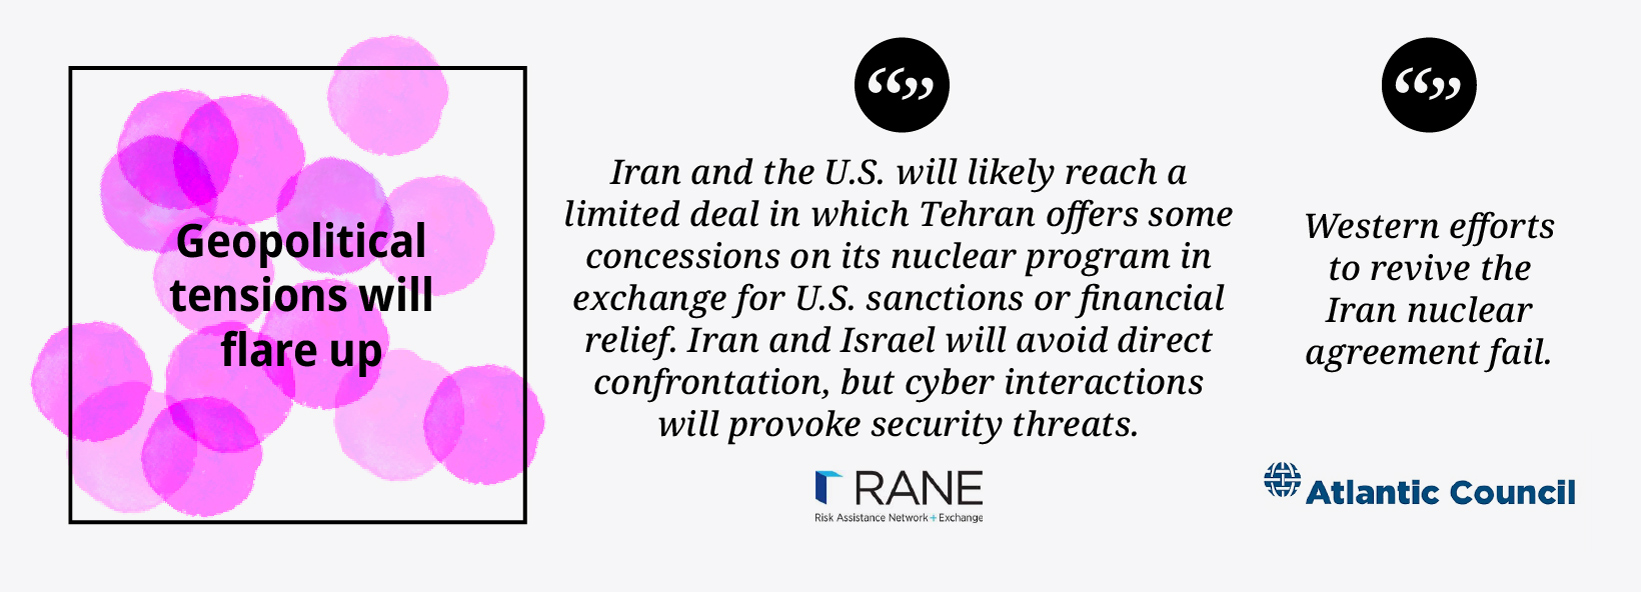 tensões geopolíticas iranianas